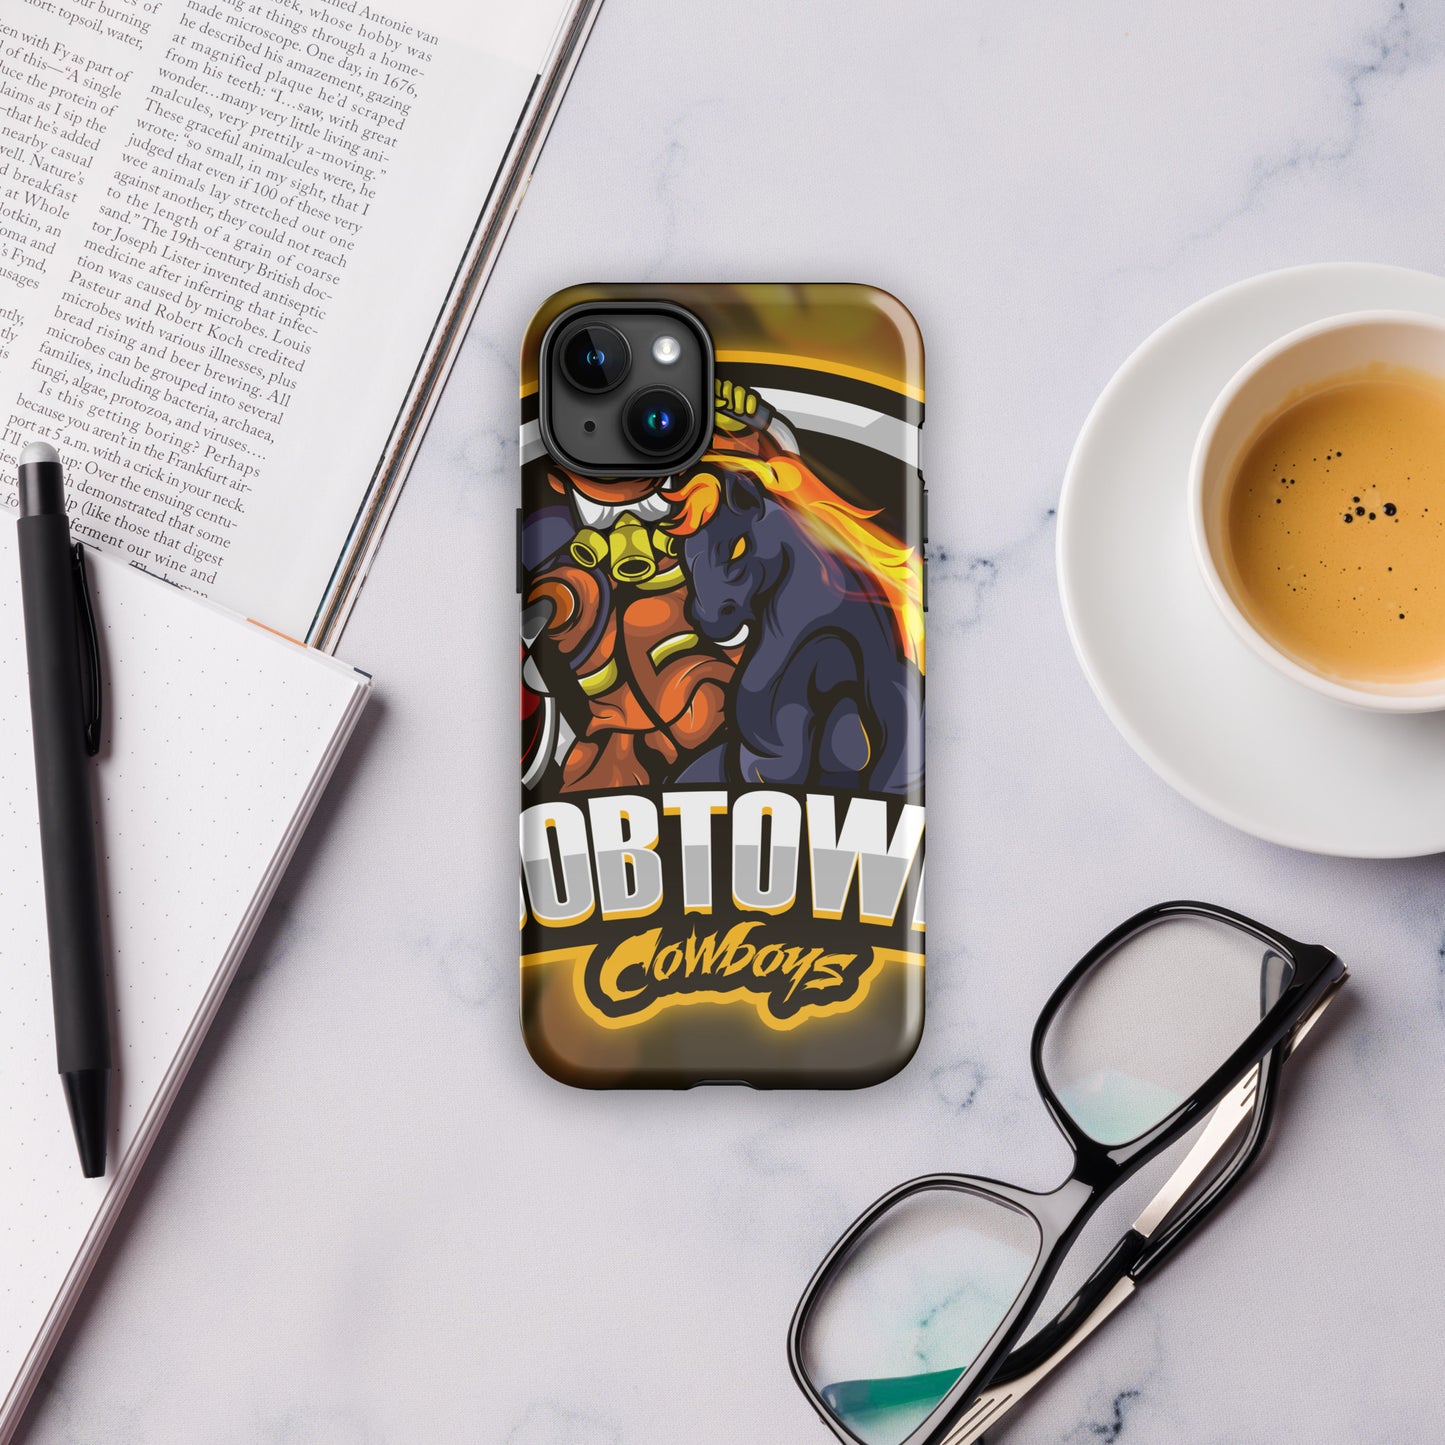 Jobtown Cowboys Firefighter Tough Case for iPhone®- The Original Design